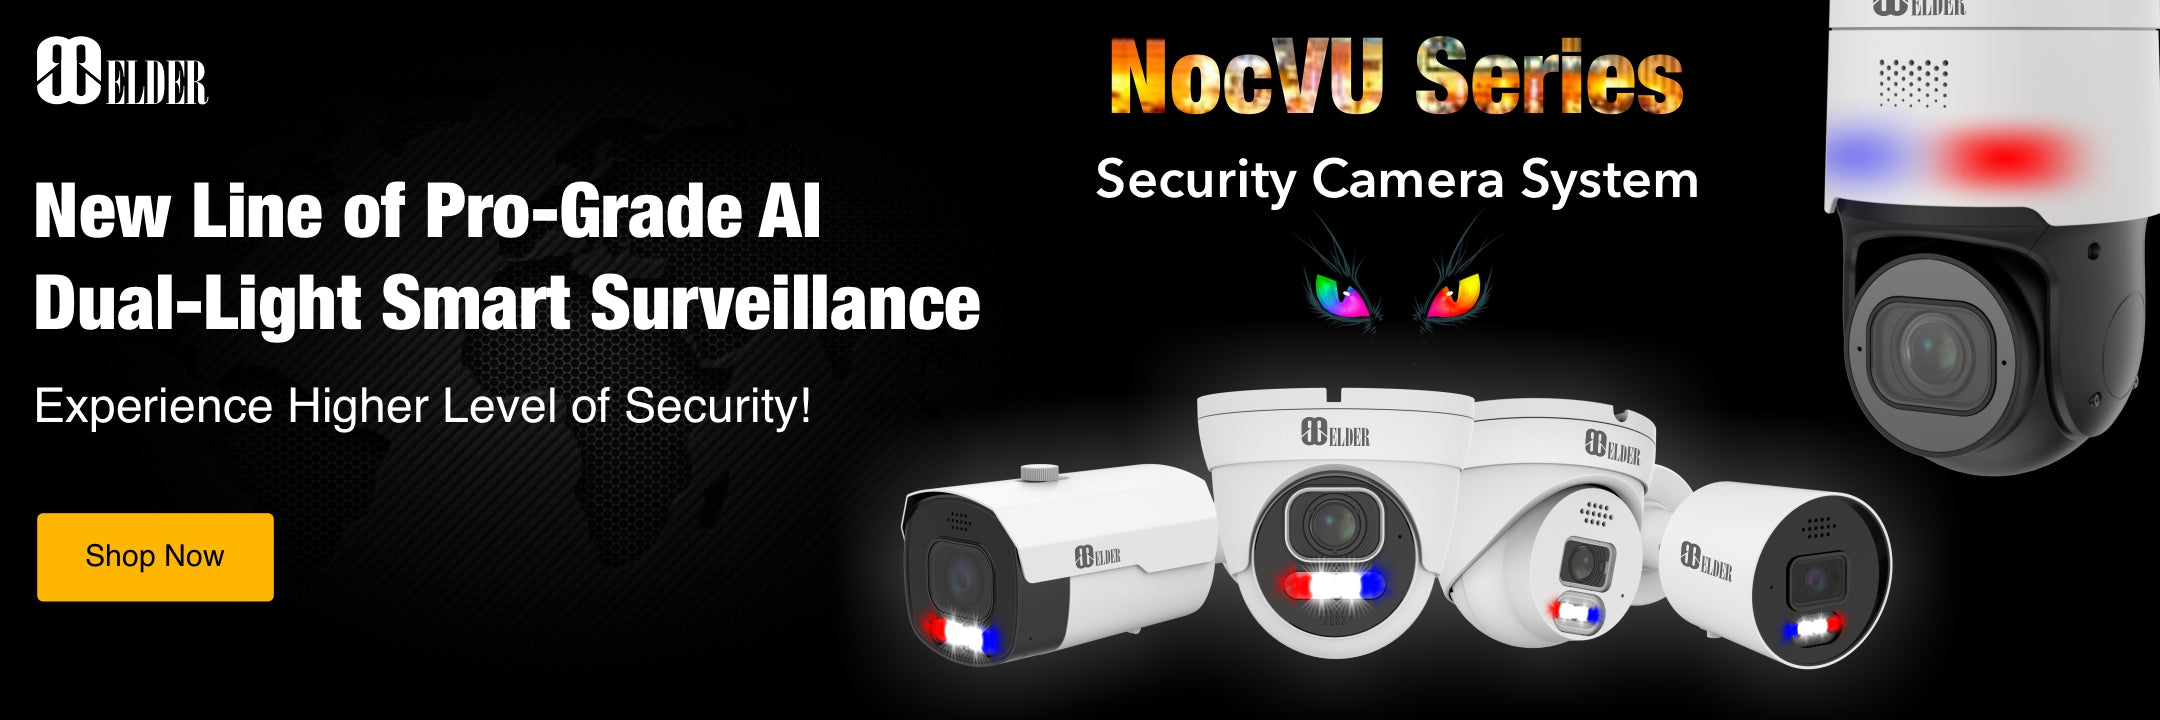 NocVU Security Camera System for Nocturnal Surveillance